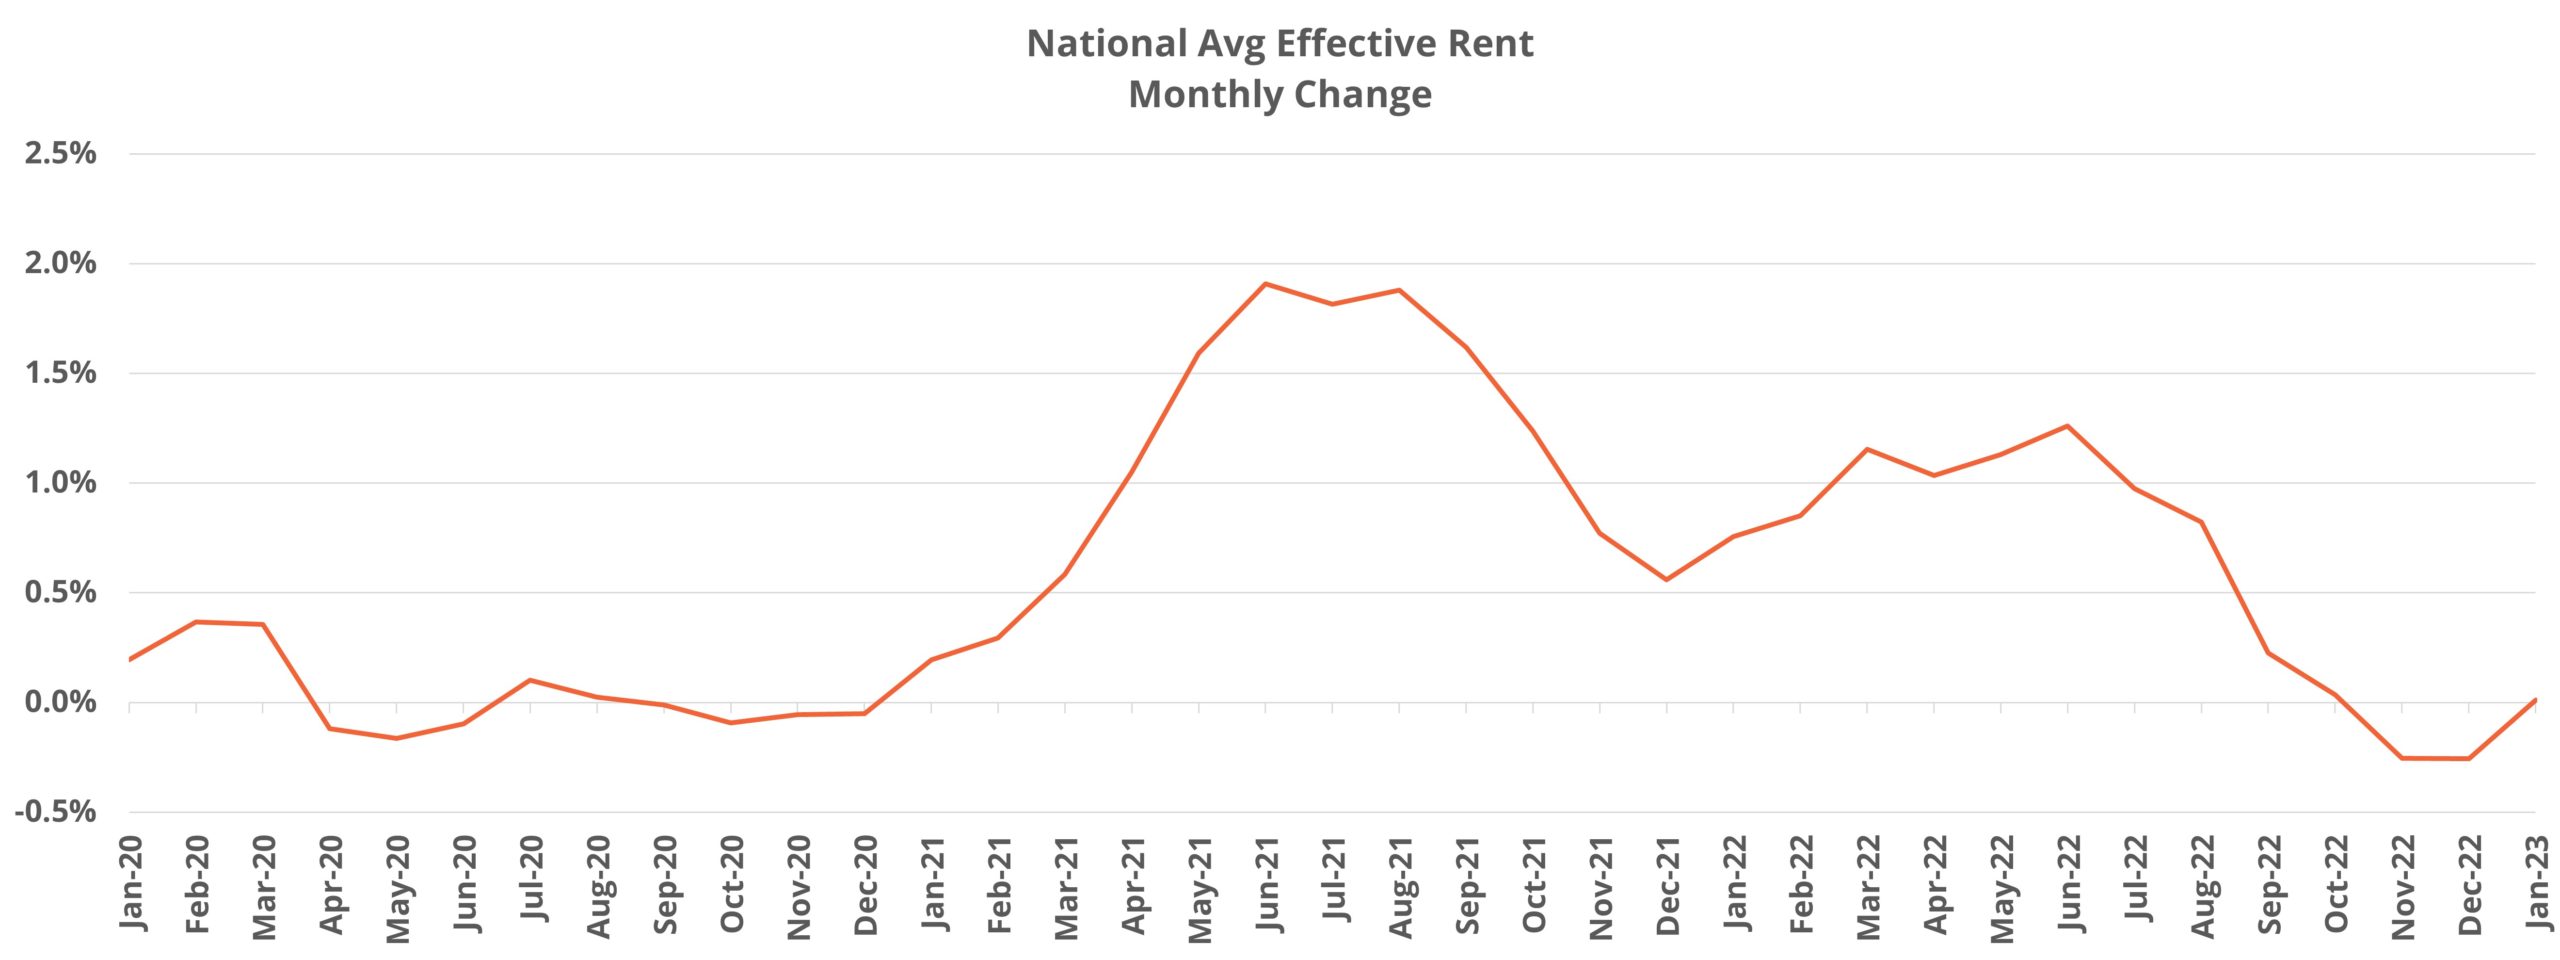 National Average Effective Rent